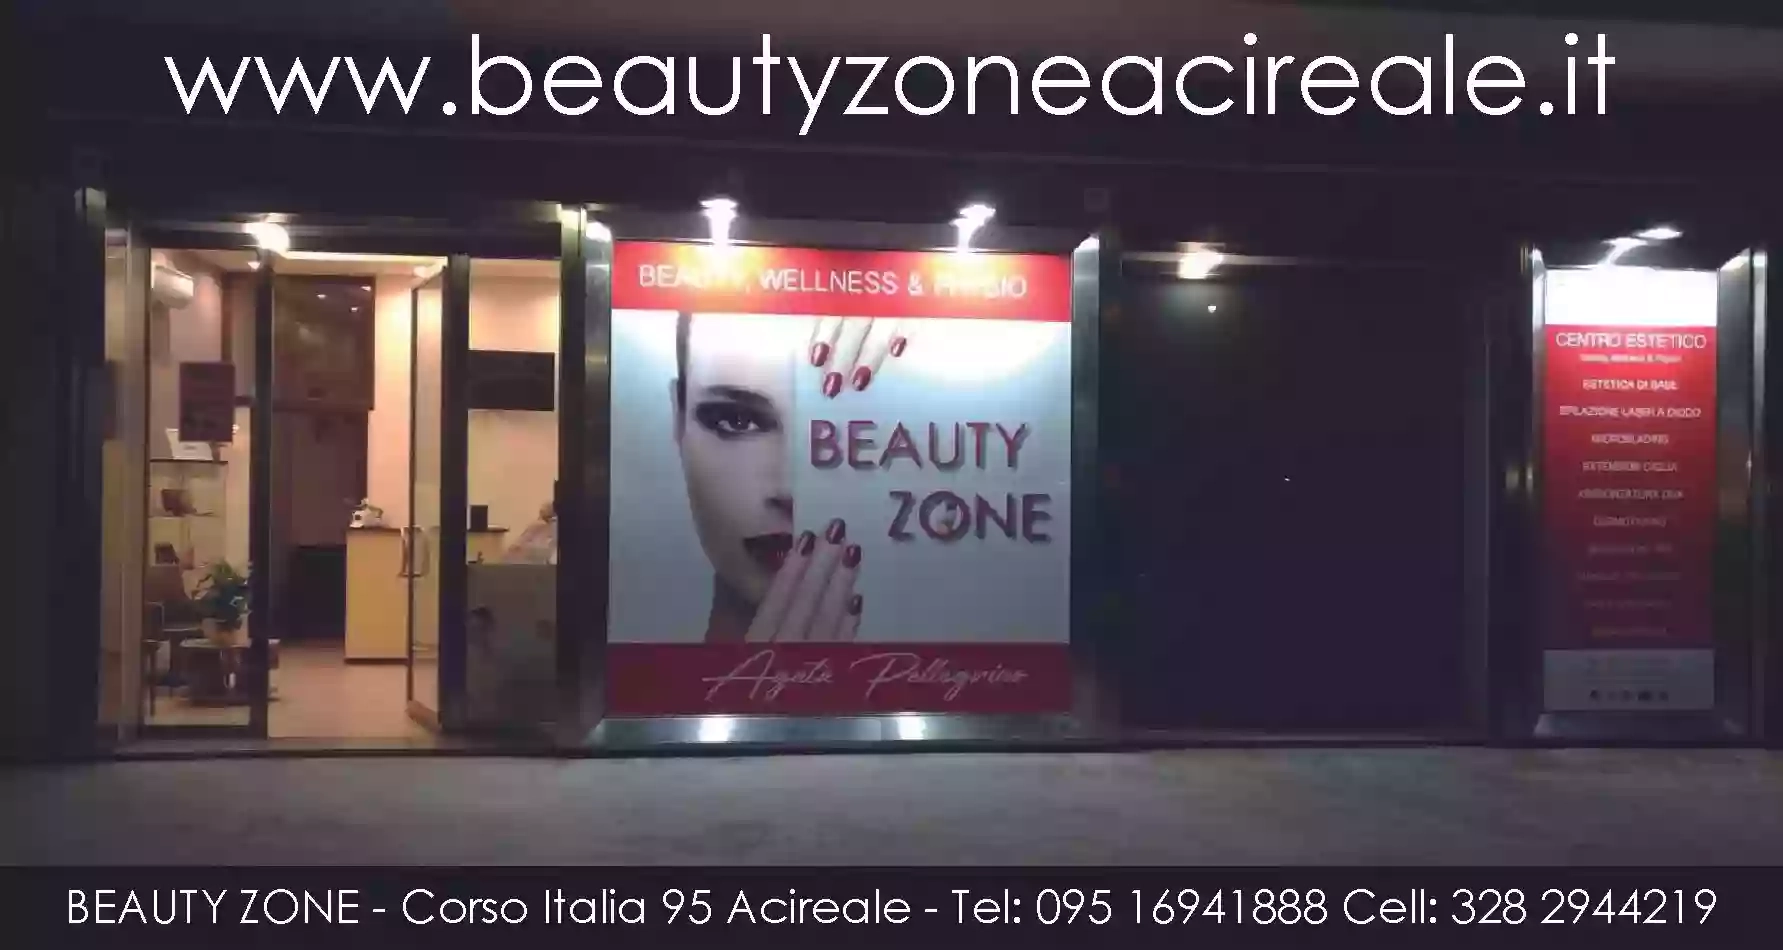 Beauty Zone Agata Pellegrino